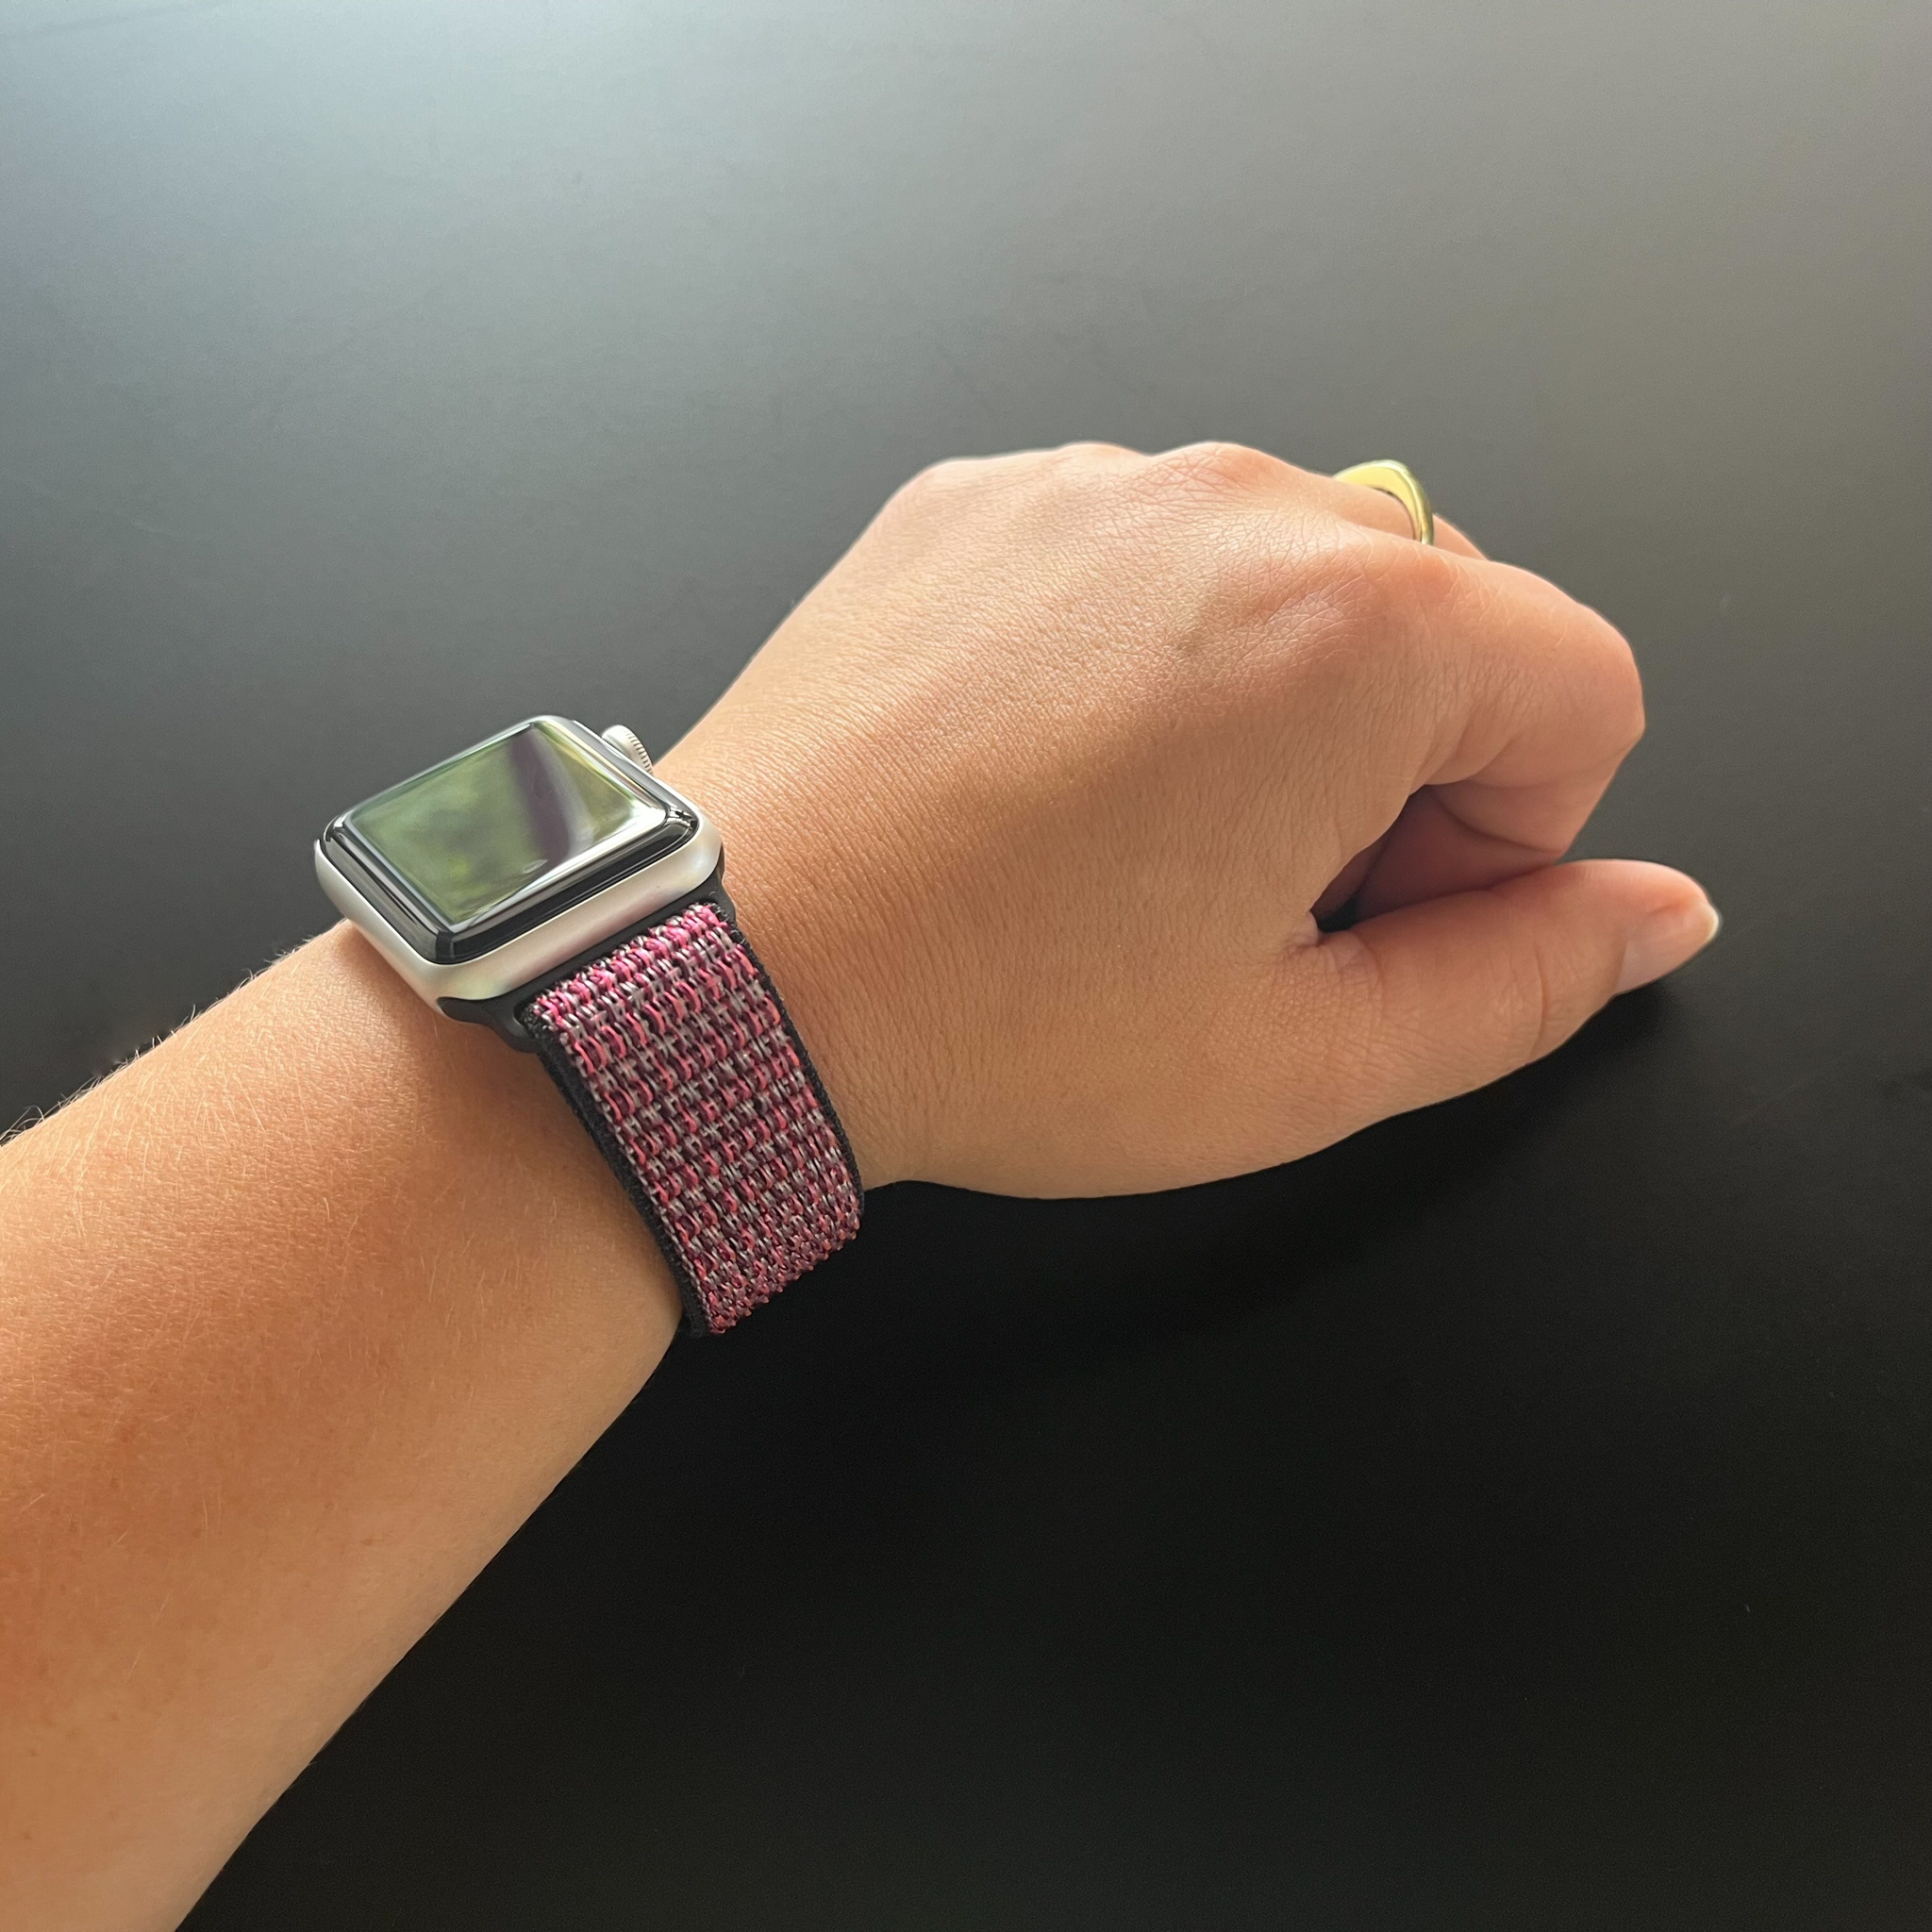 Apple Watch nylon geweven sport band  - roze blast echte bes